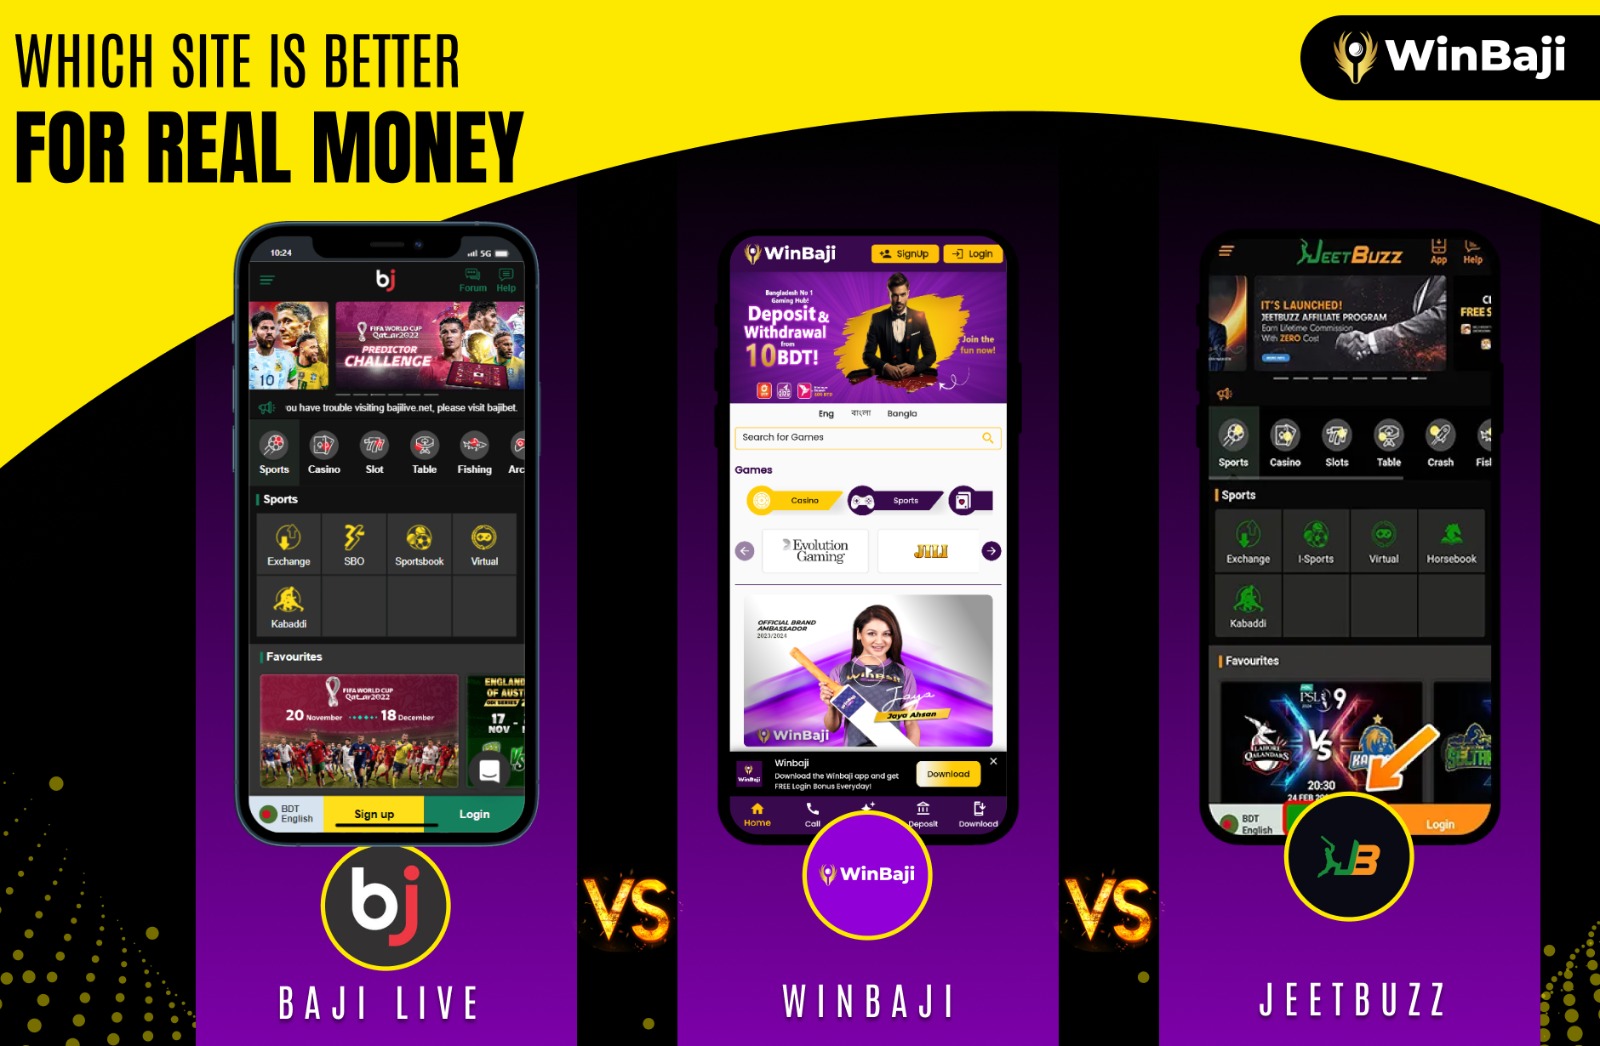 JeetBuzz vs. Baji Live vs. WinBaji: Which Site is Better for Real Money?